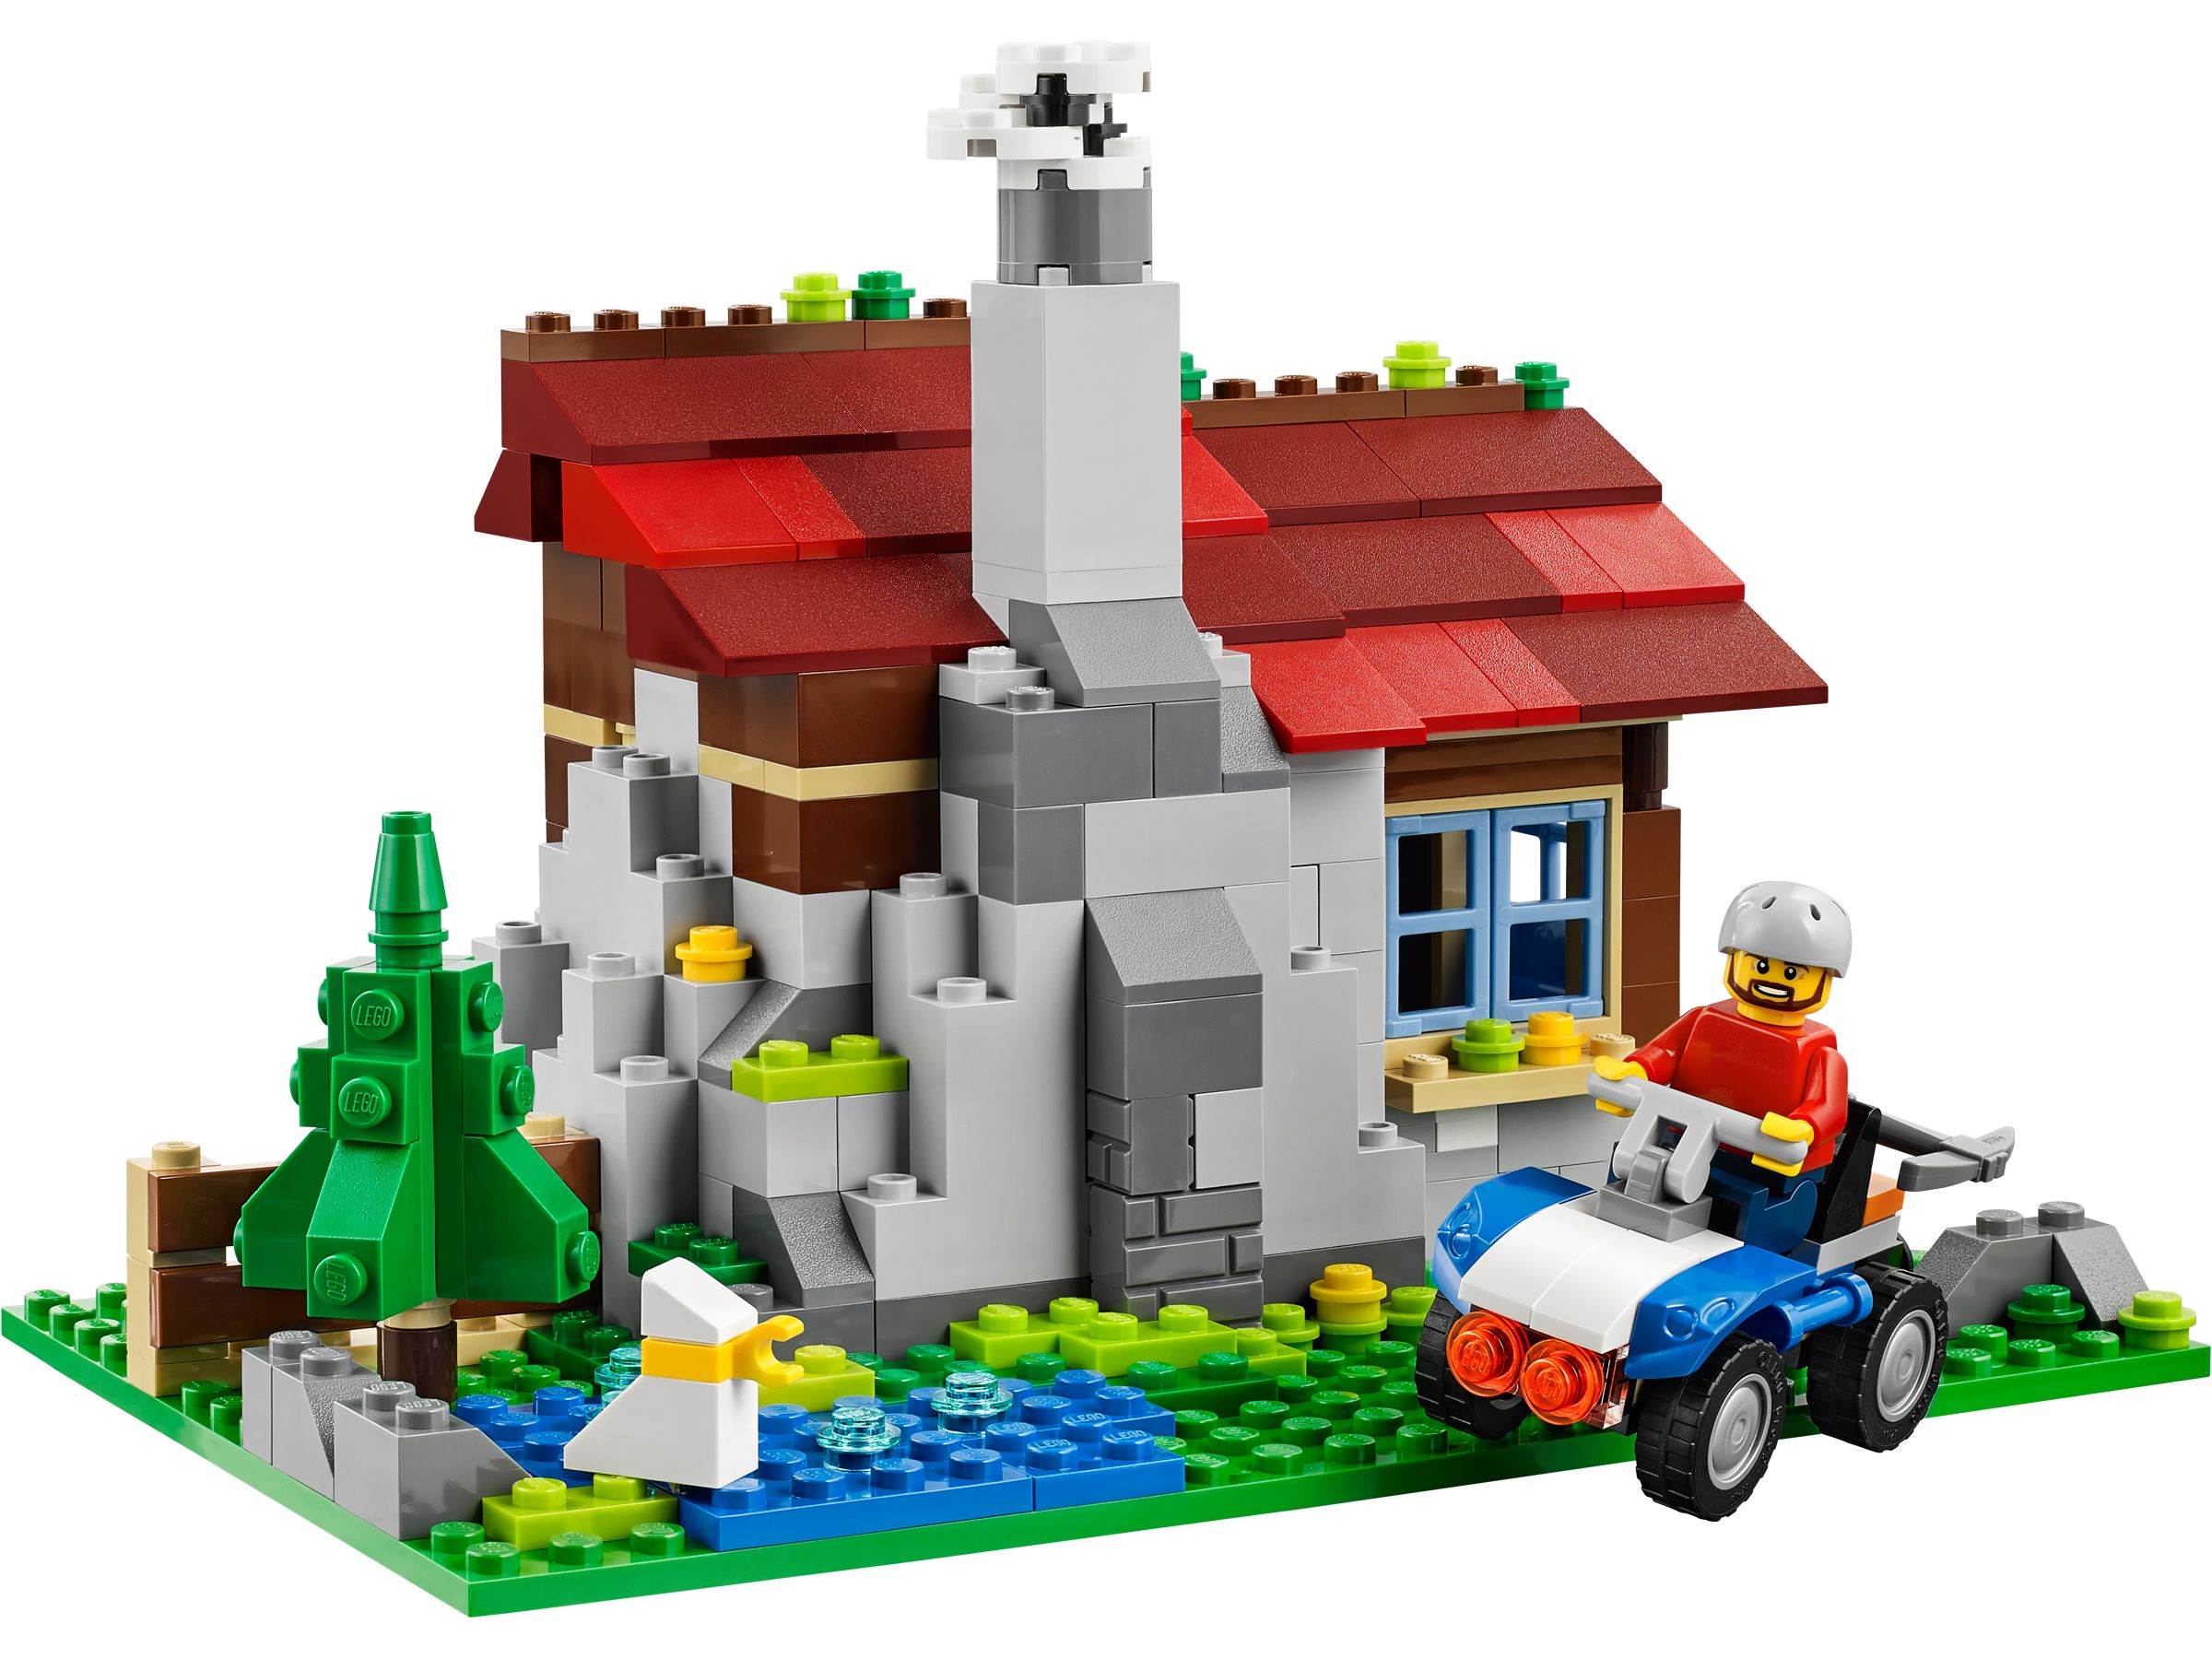 LEGO Creator 31025 - Mountain Hut - image 5 of 6